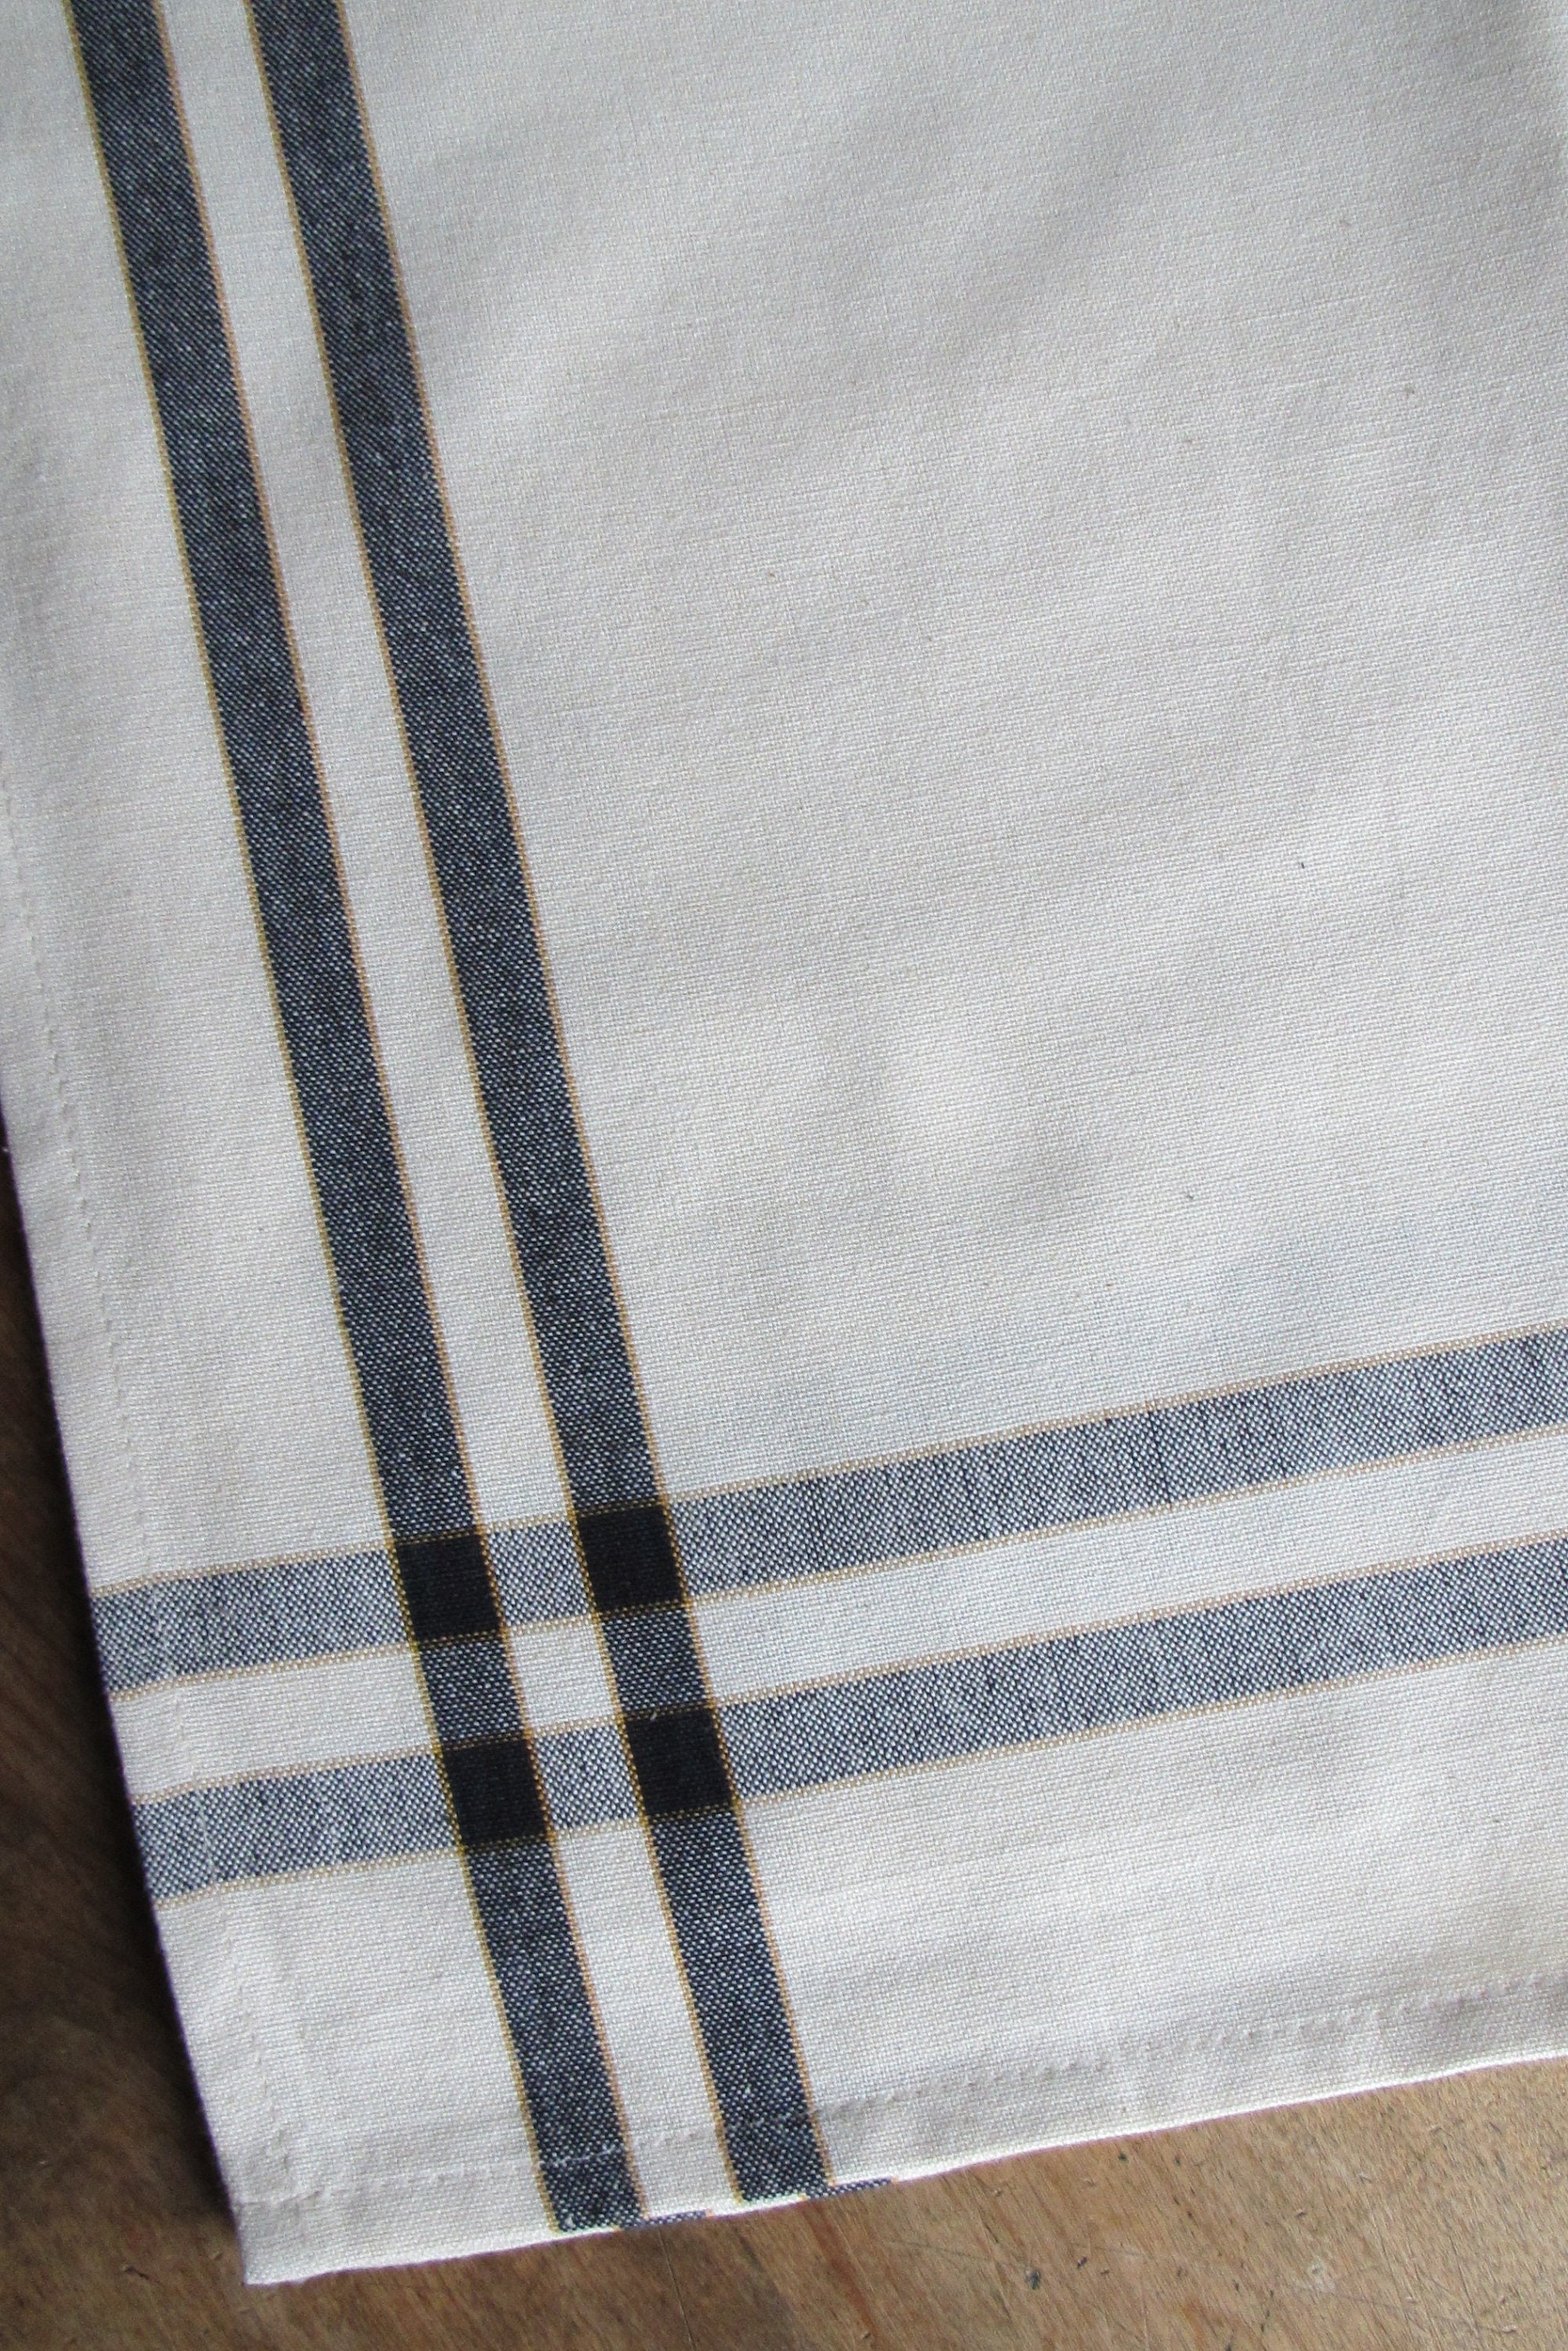 20 x 28 McLeod No Stripe Towel - Gray & White